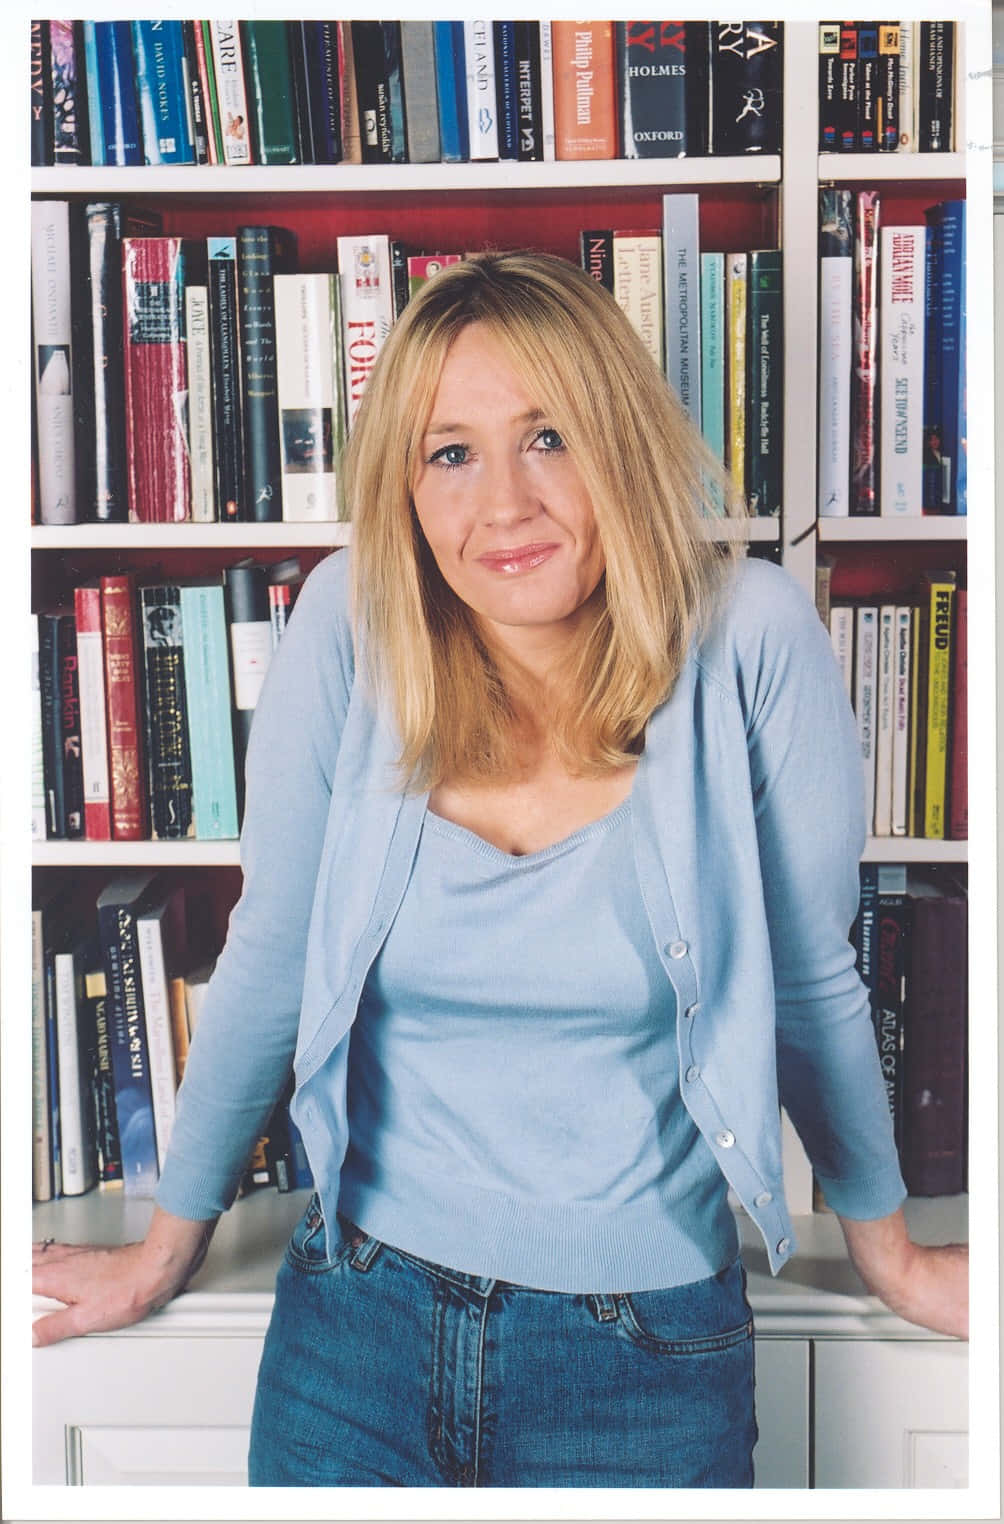 J.K. Rowling at an event Wallpaper